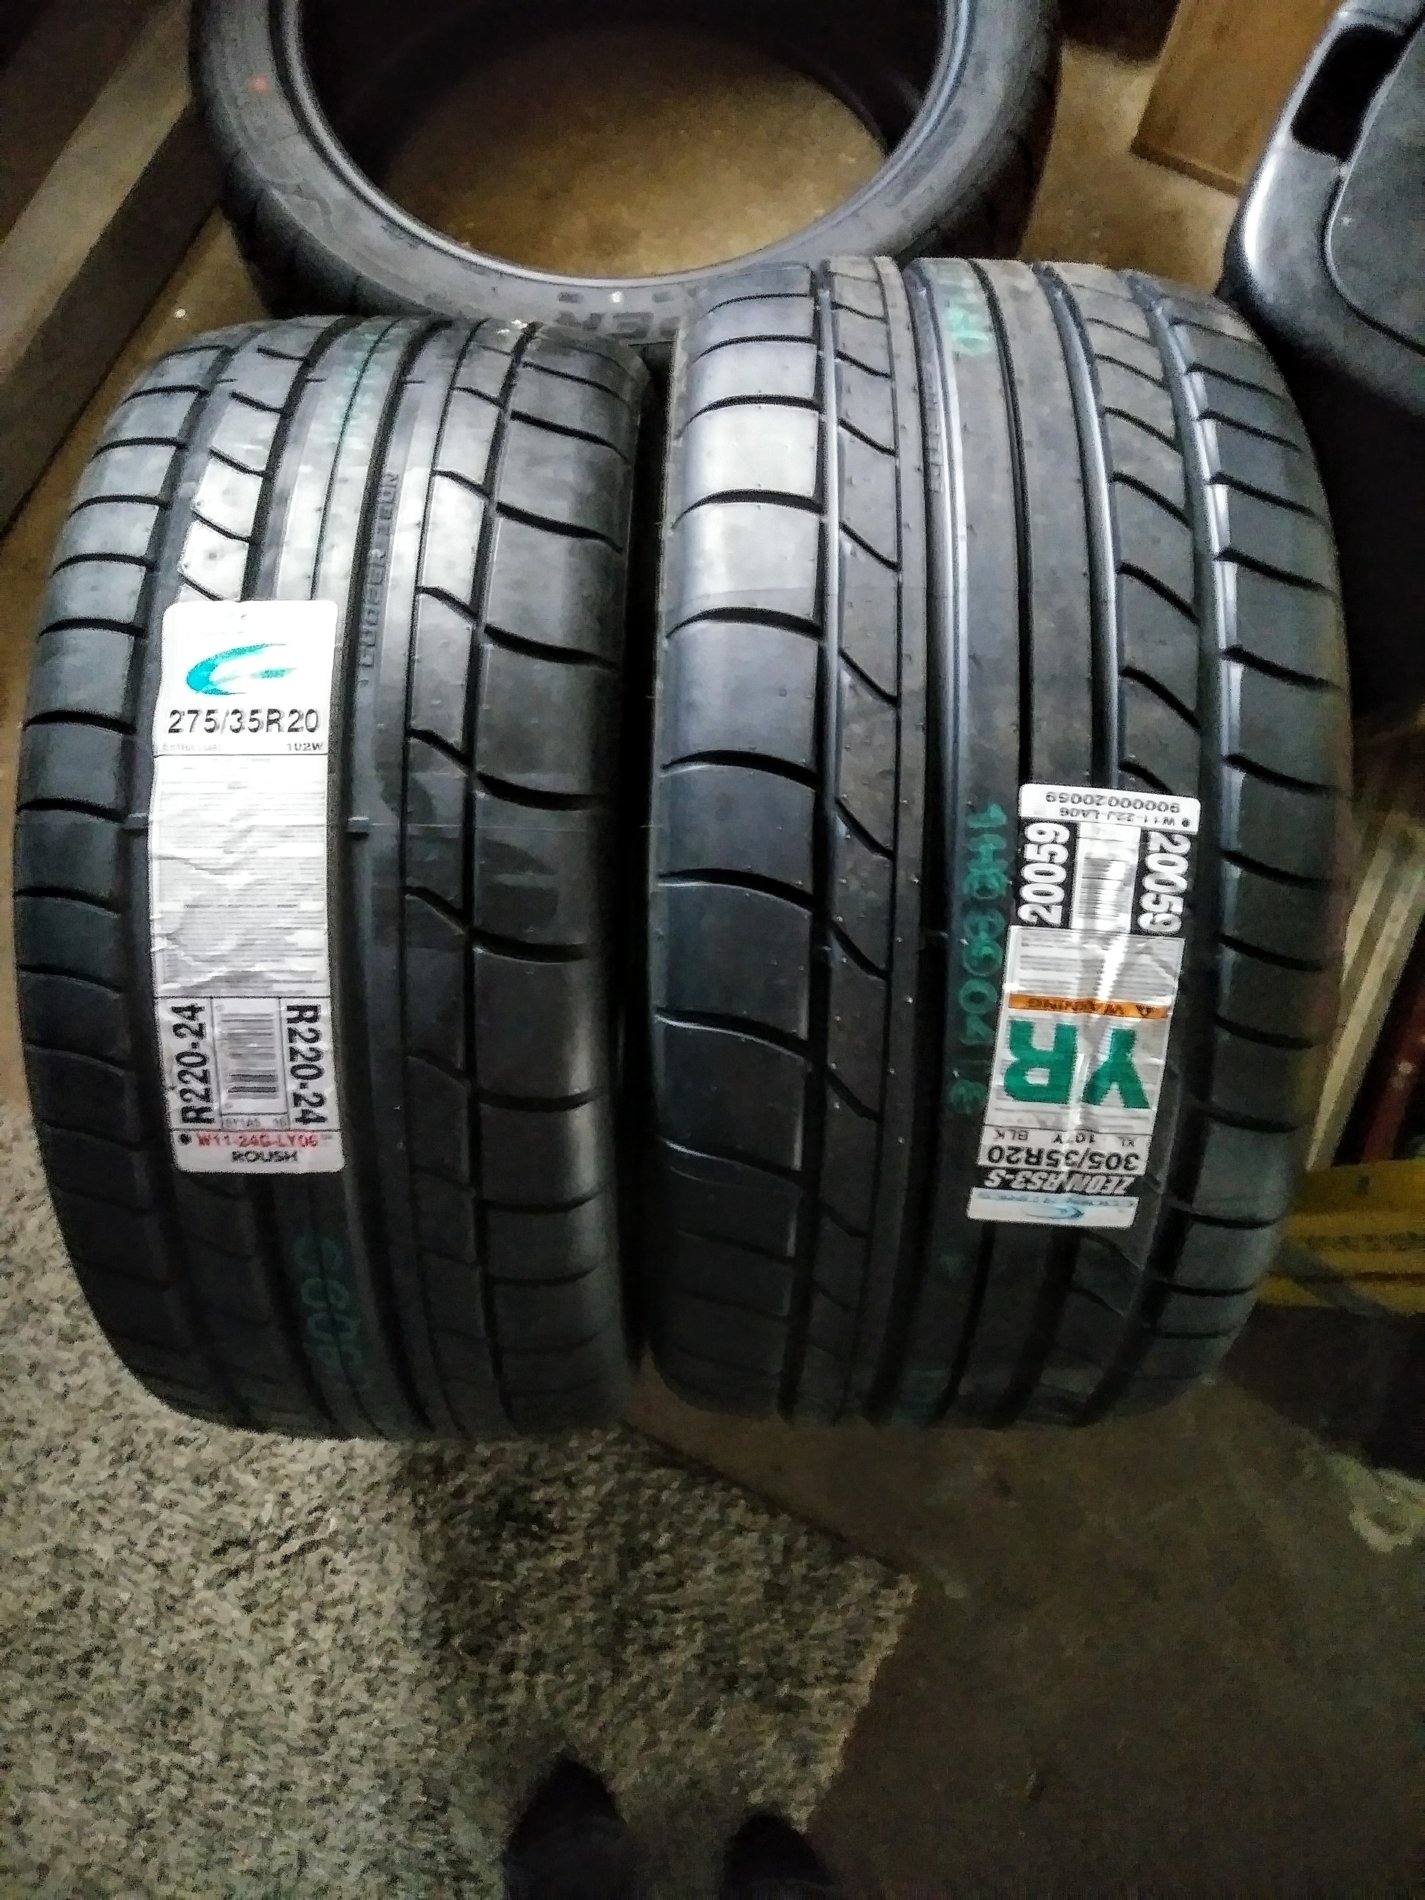 20190624_161134_HDR~2 tires.jpg